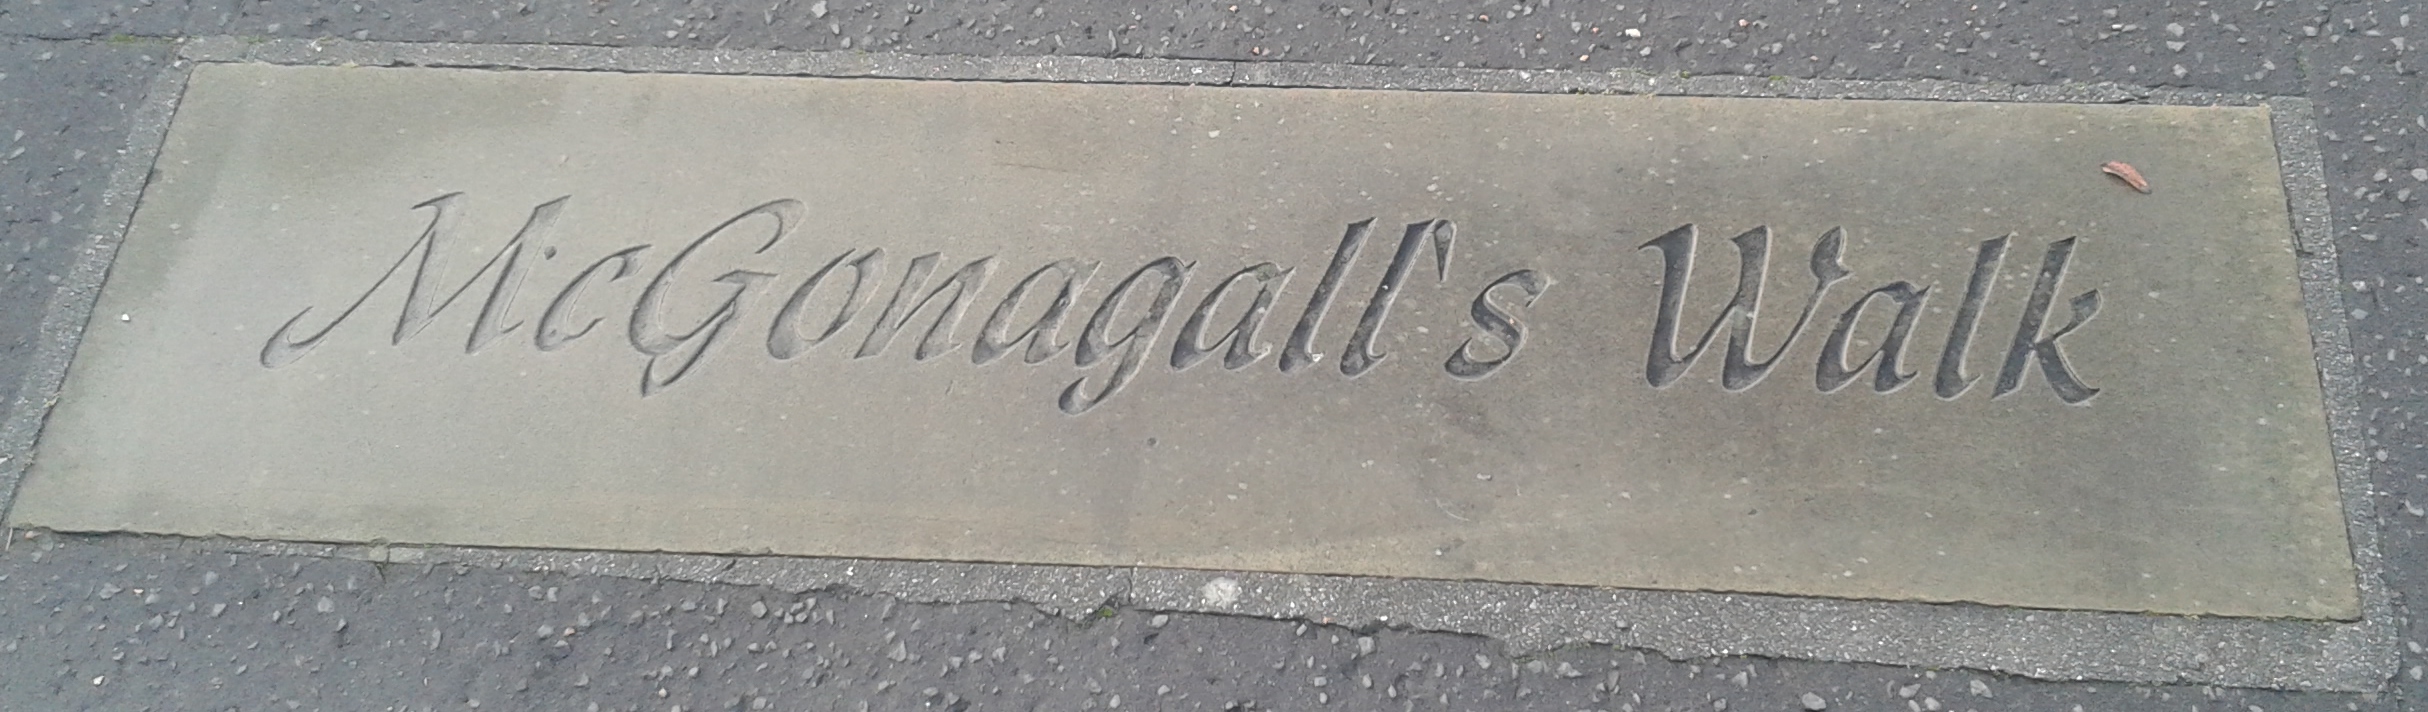 Plaque on the ground saying "McGonagall's Walk"